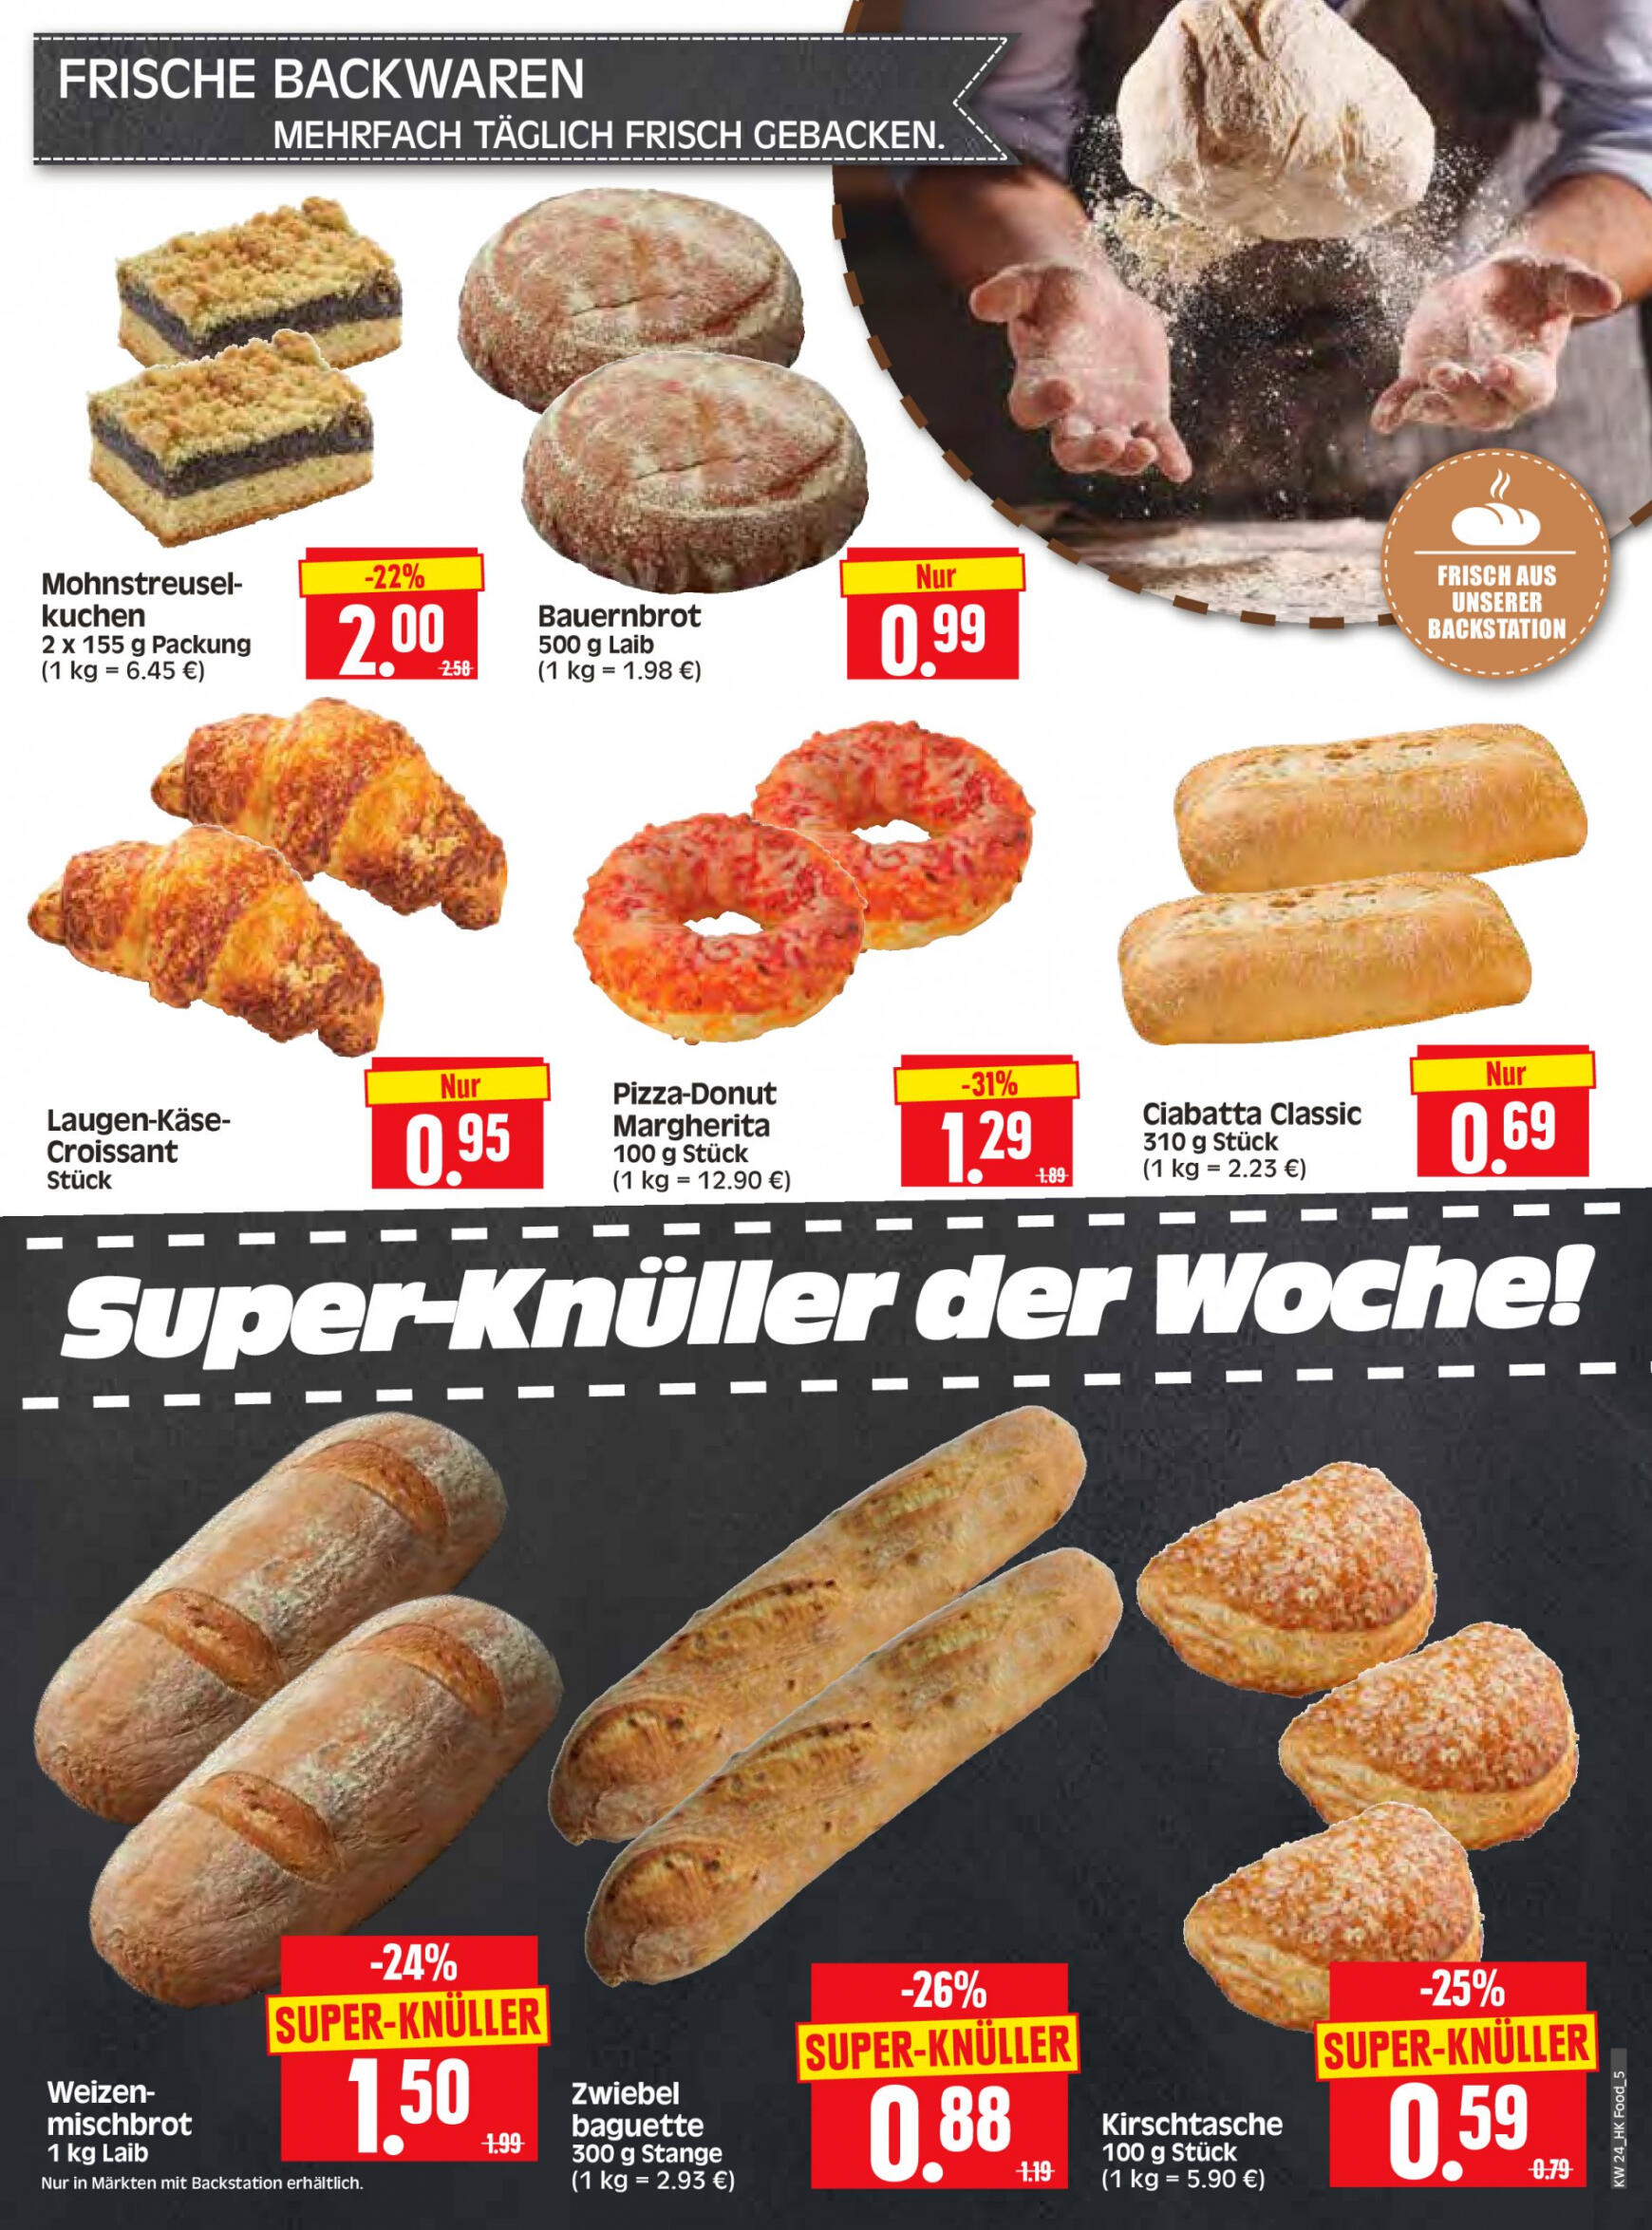 herkules - Flyer Herkules - Lebensmittel aktuell 10.06. - 15.06. - page: 5